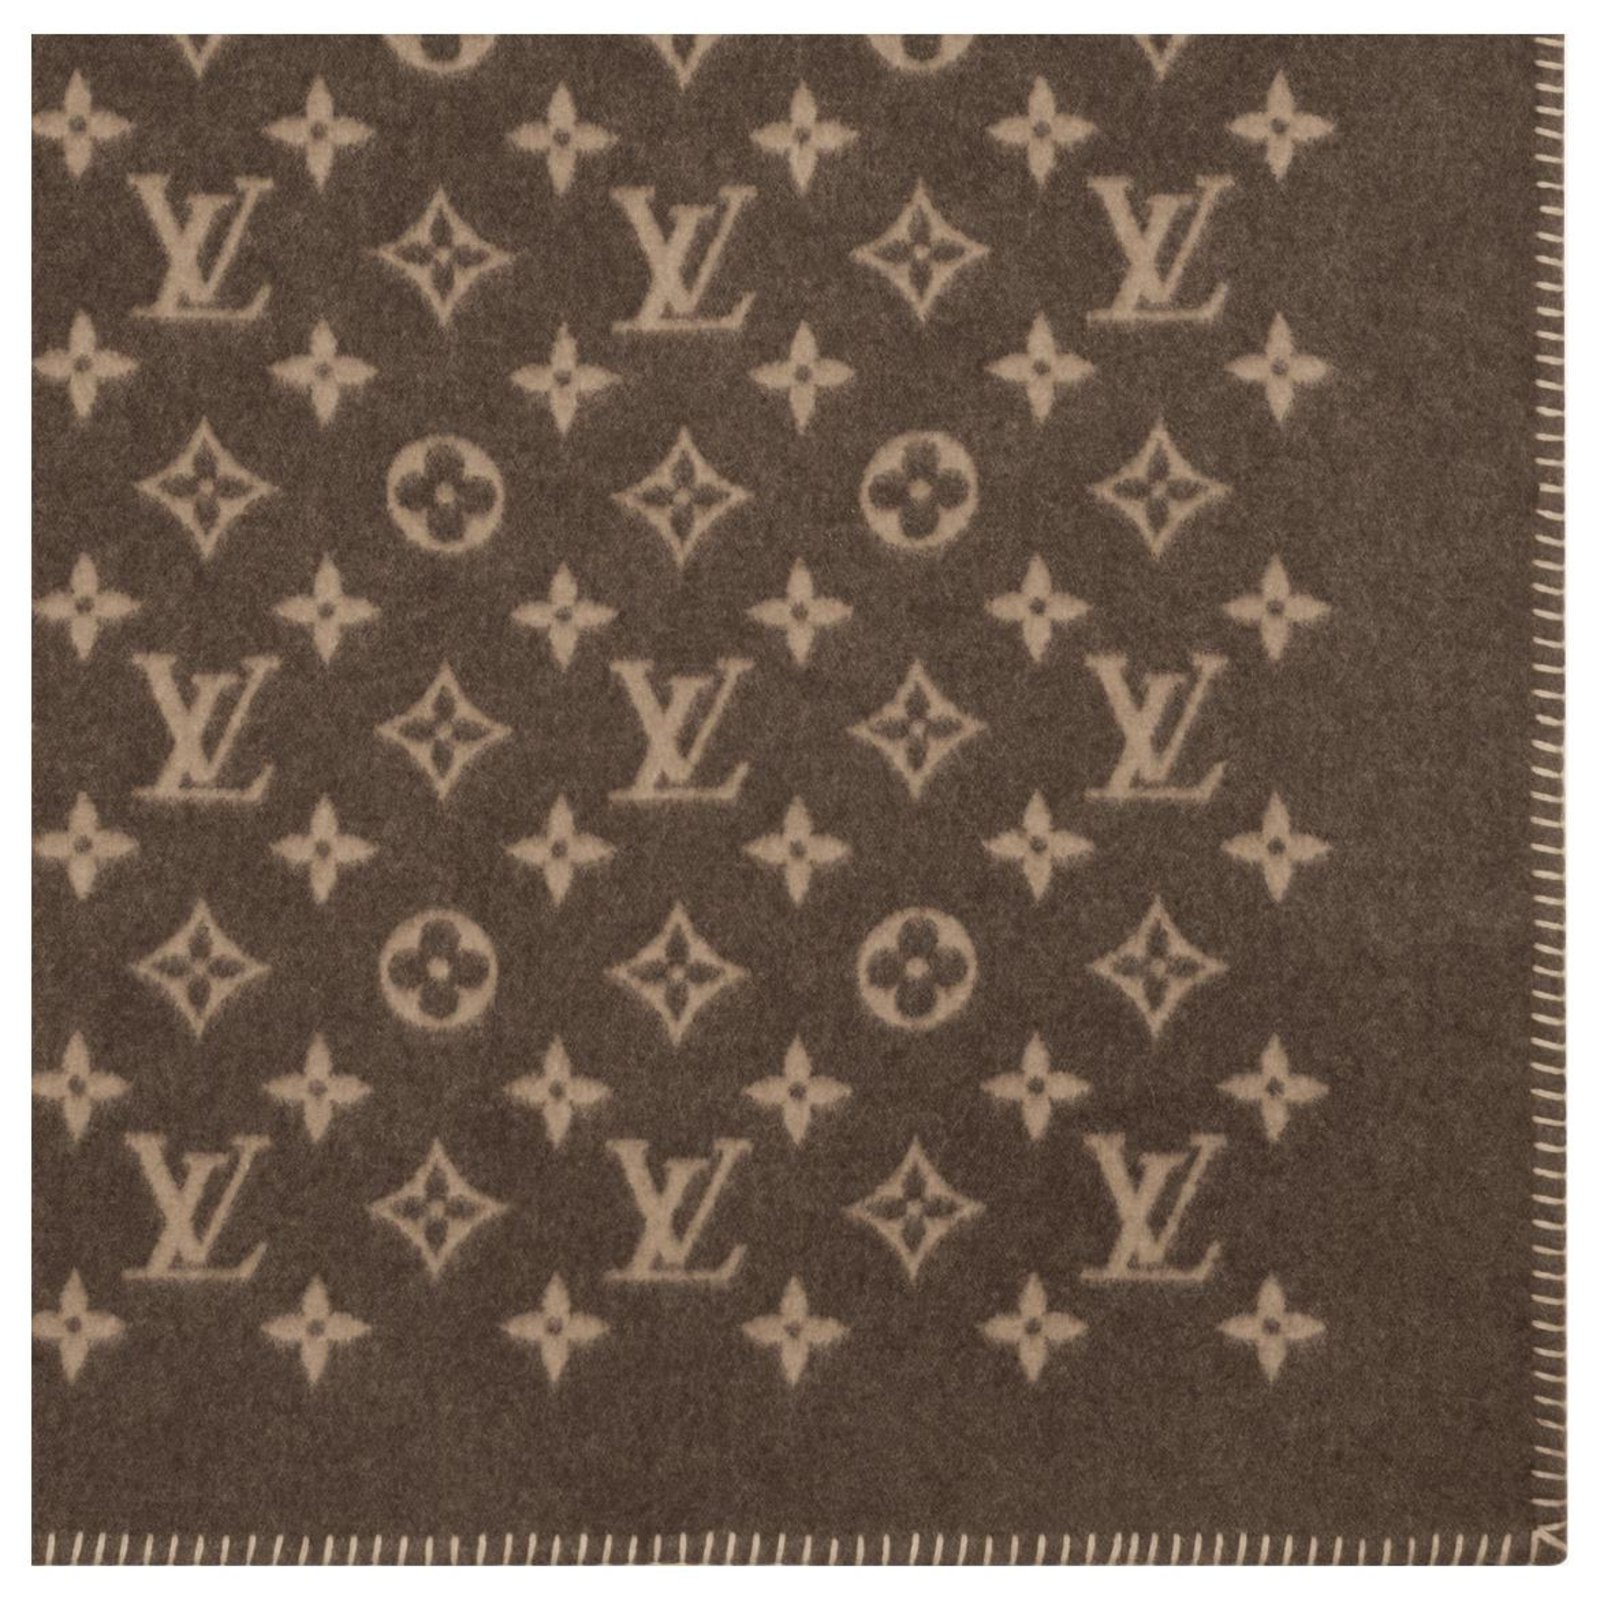 Louis Vuitton Throw Blanket Tan Ivory Monogram 90% Wool 10% Cashmere M70440  New